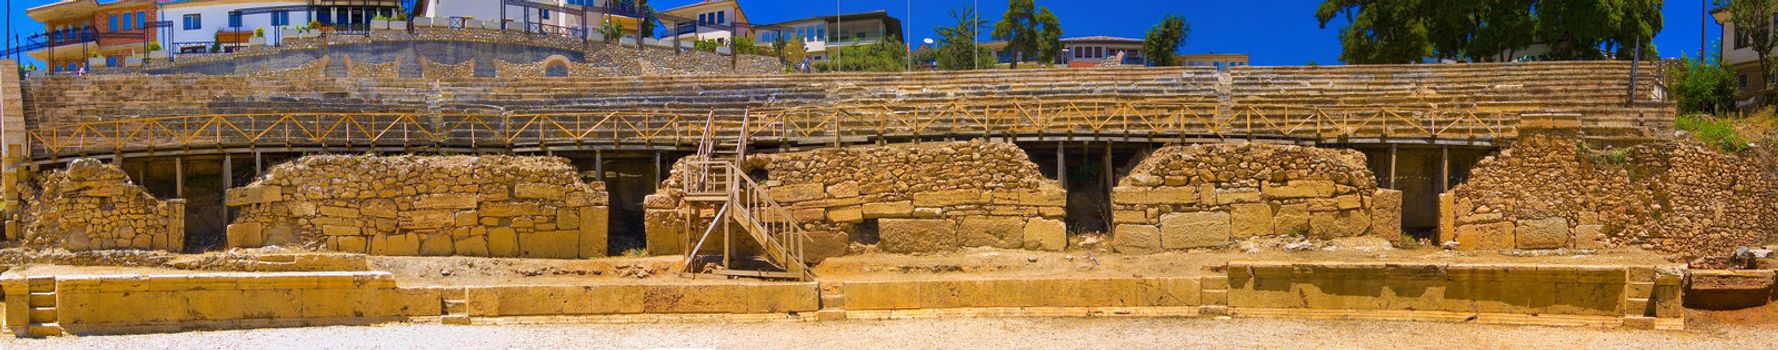 Ancient stone amphitheater, panorama in touristic destination Ohrid